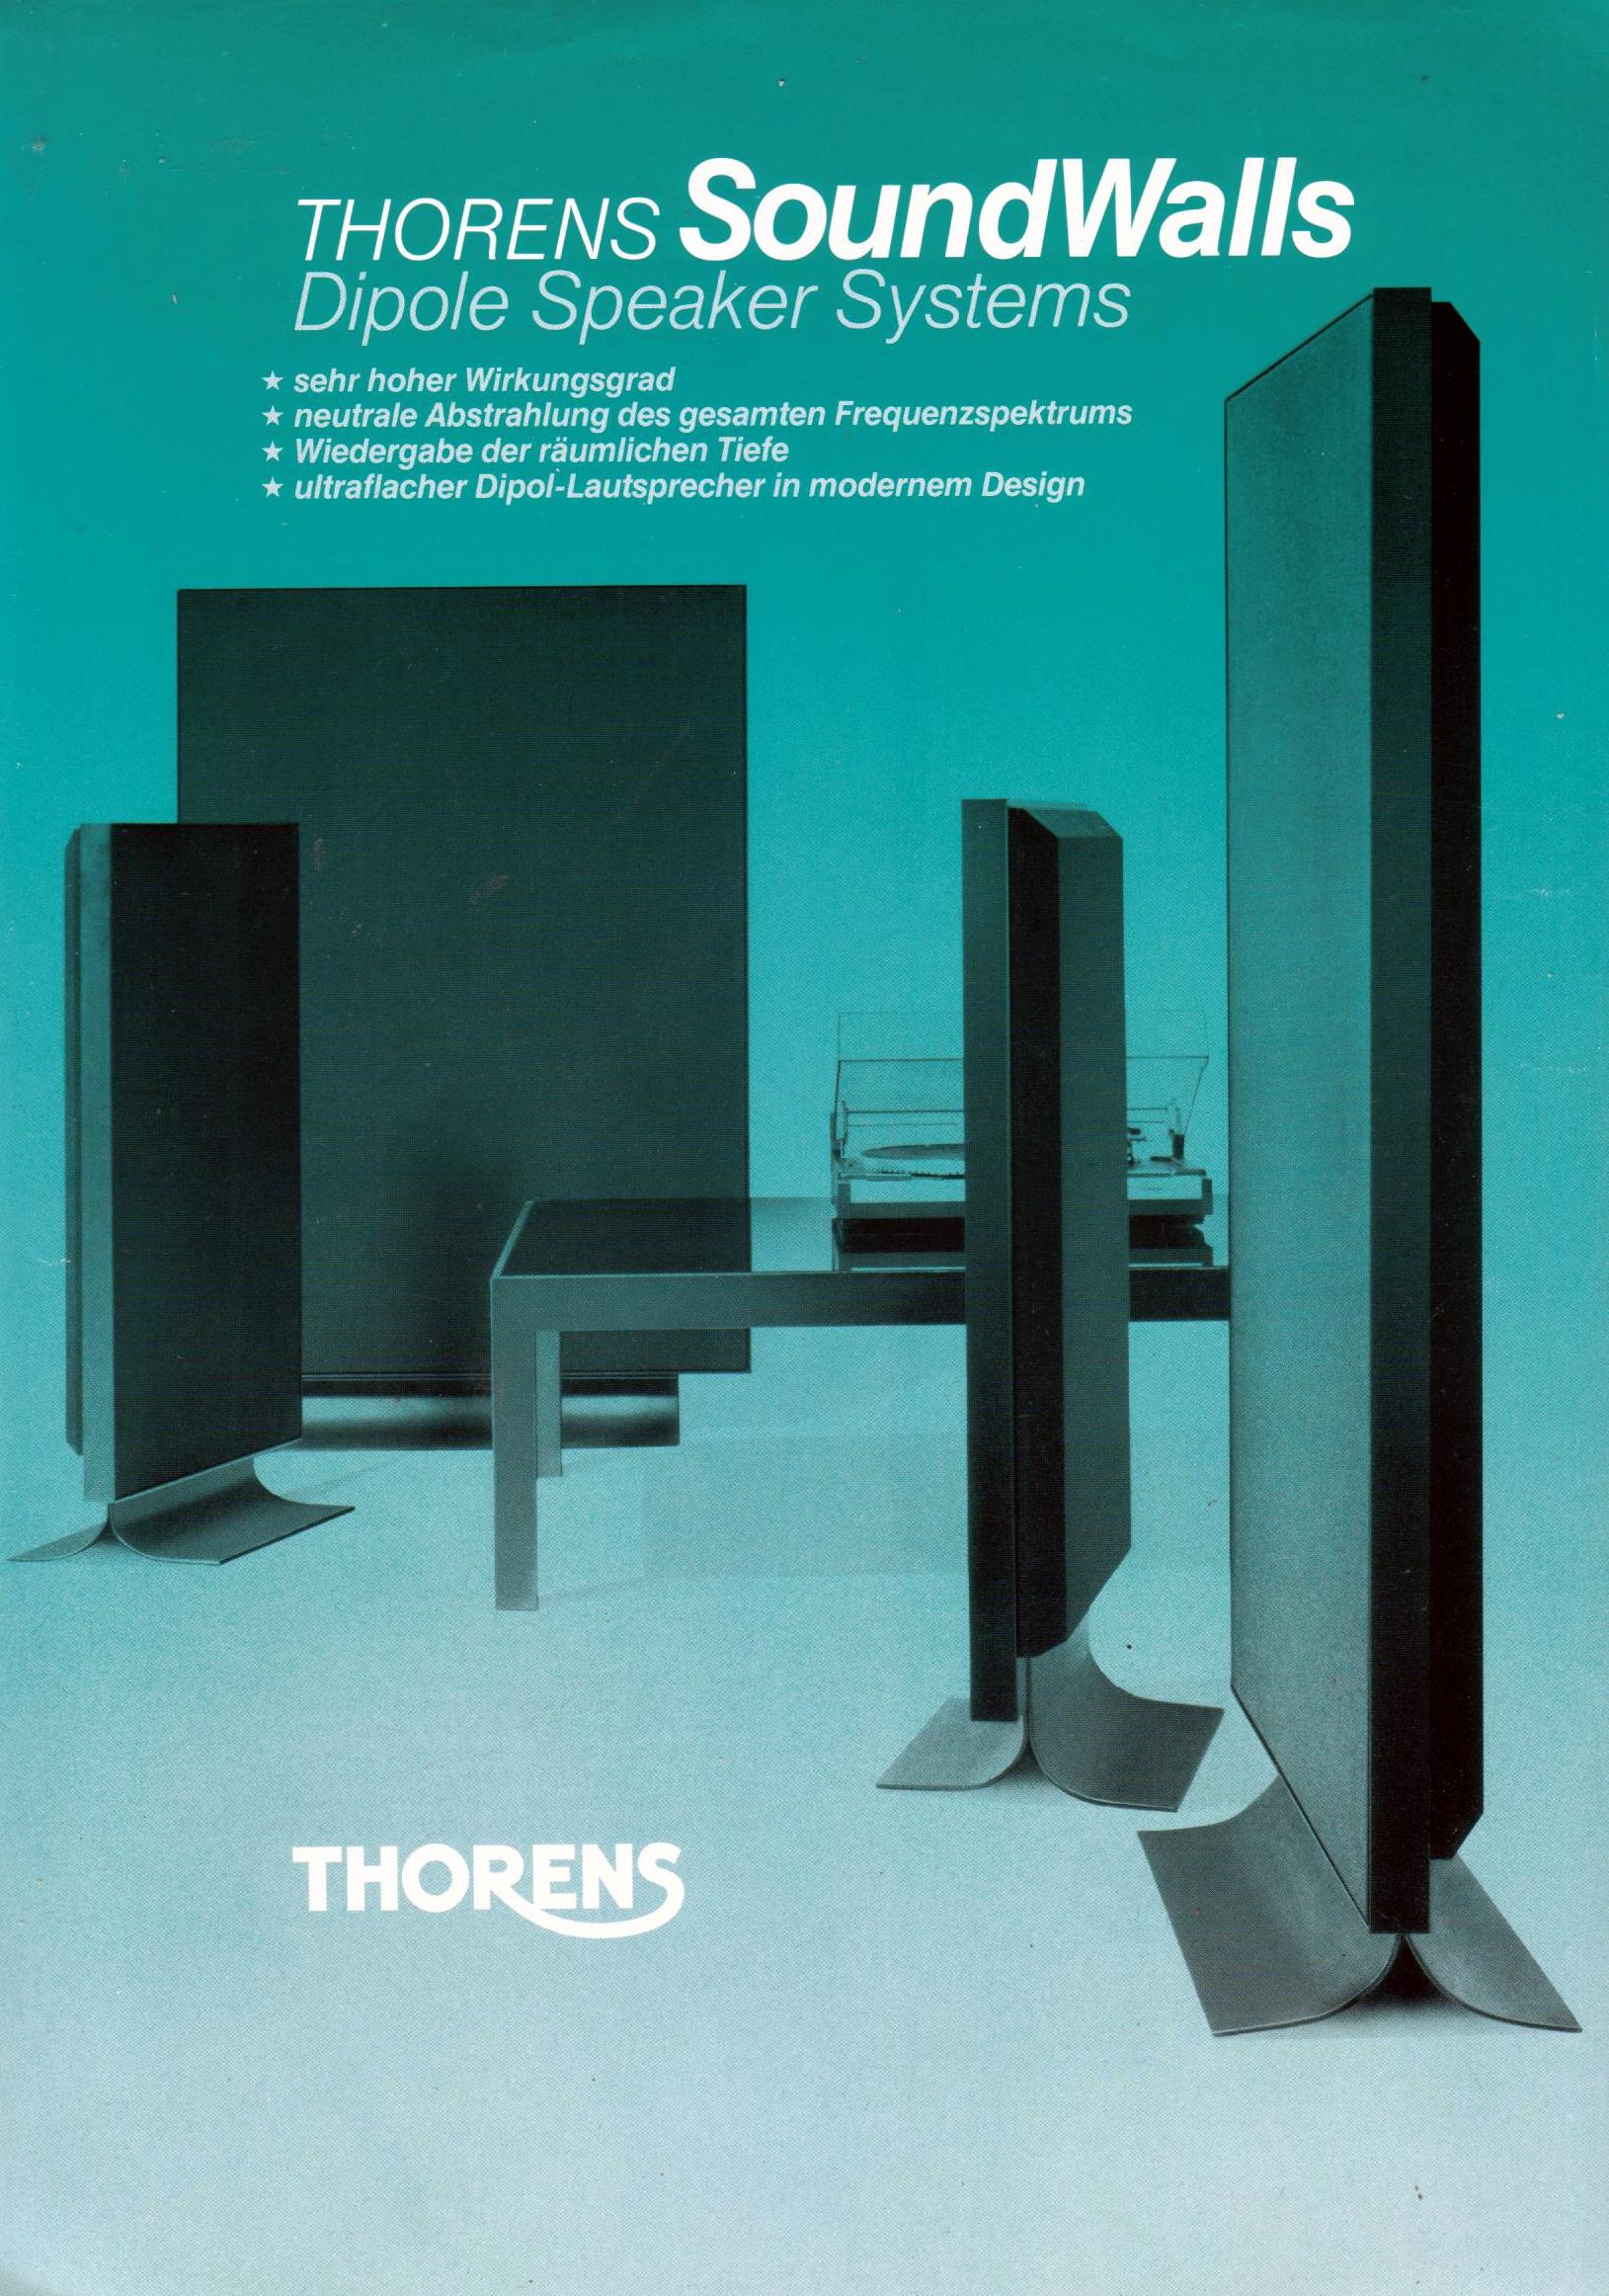 Thorens Soundwall HP-360-380-Prospekt-1.jpg